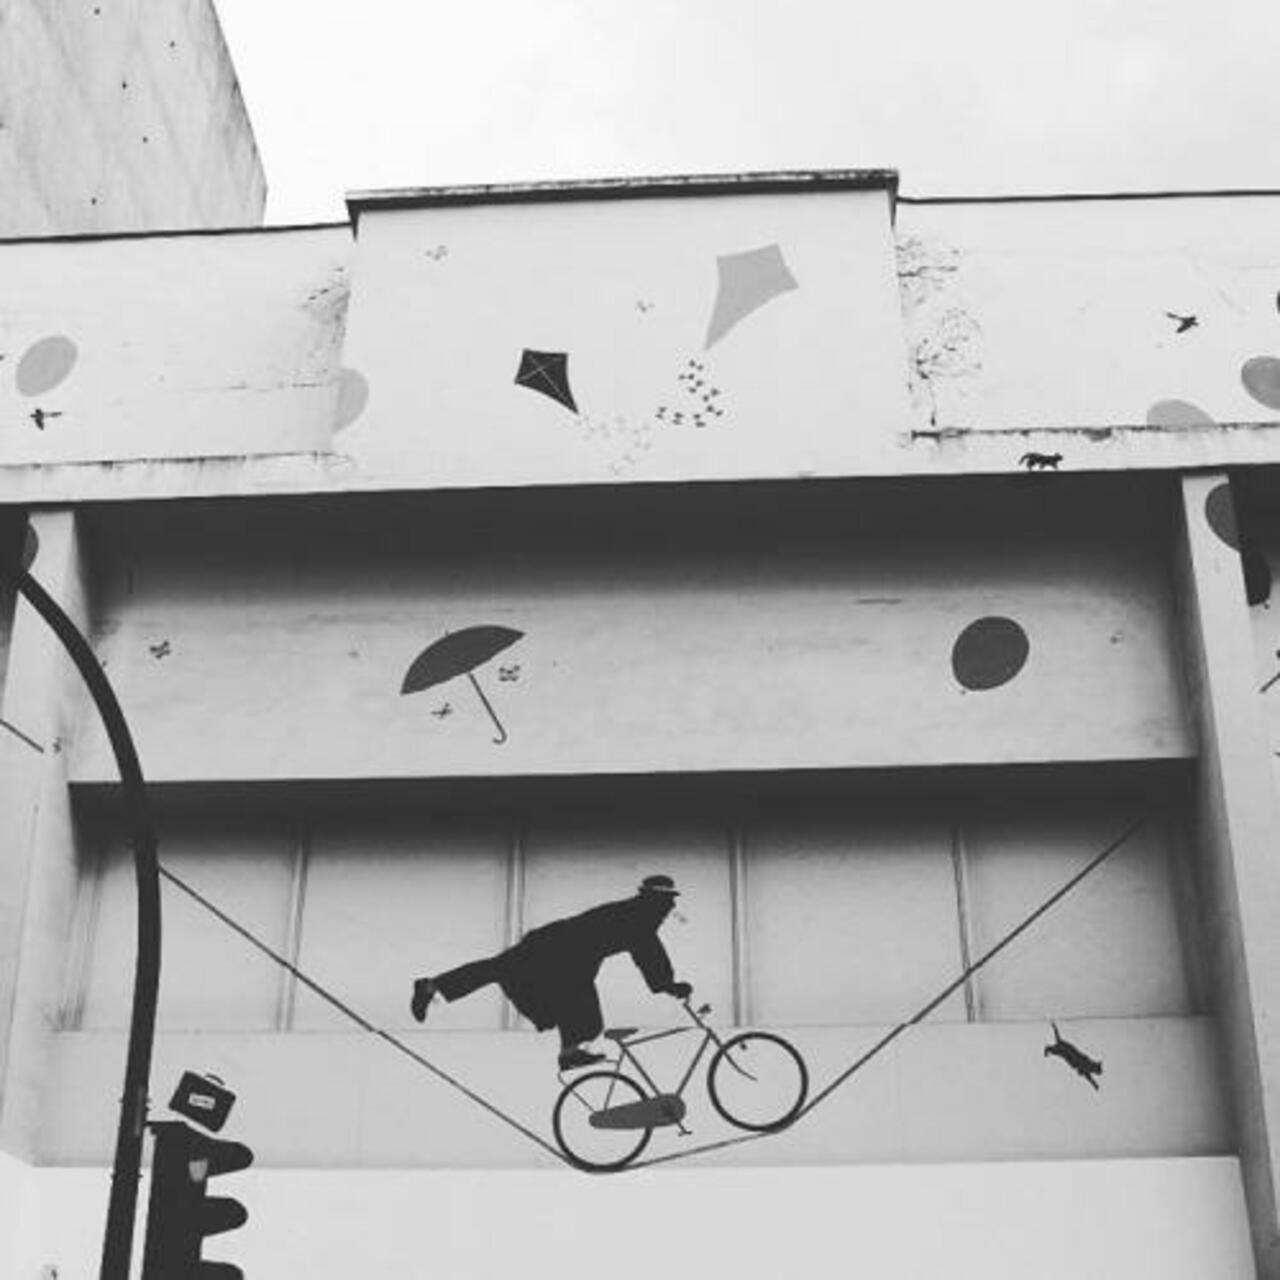 RT @Zang_Media: Nemo #striker #stencil #streetphotography #streetart #graffiti... #LoveArt - - http://wp.me/p6qjkV-4aL http://t.co/Yb7sz8fWL6